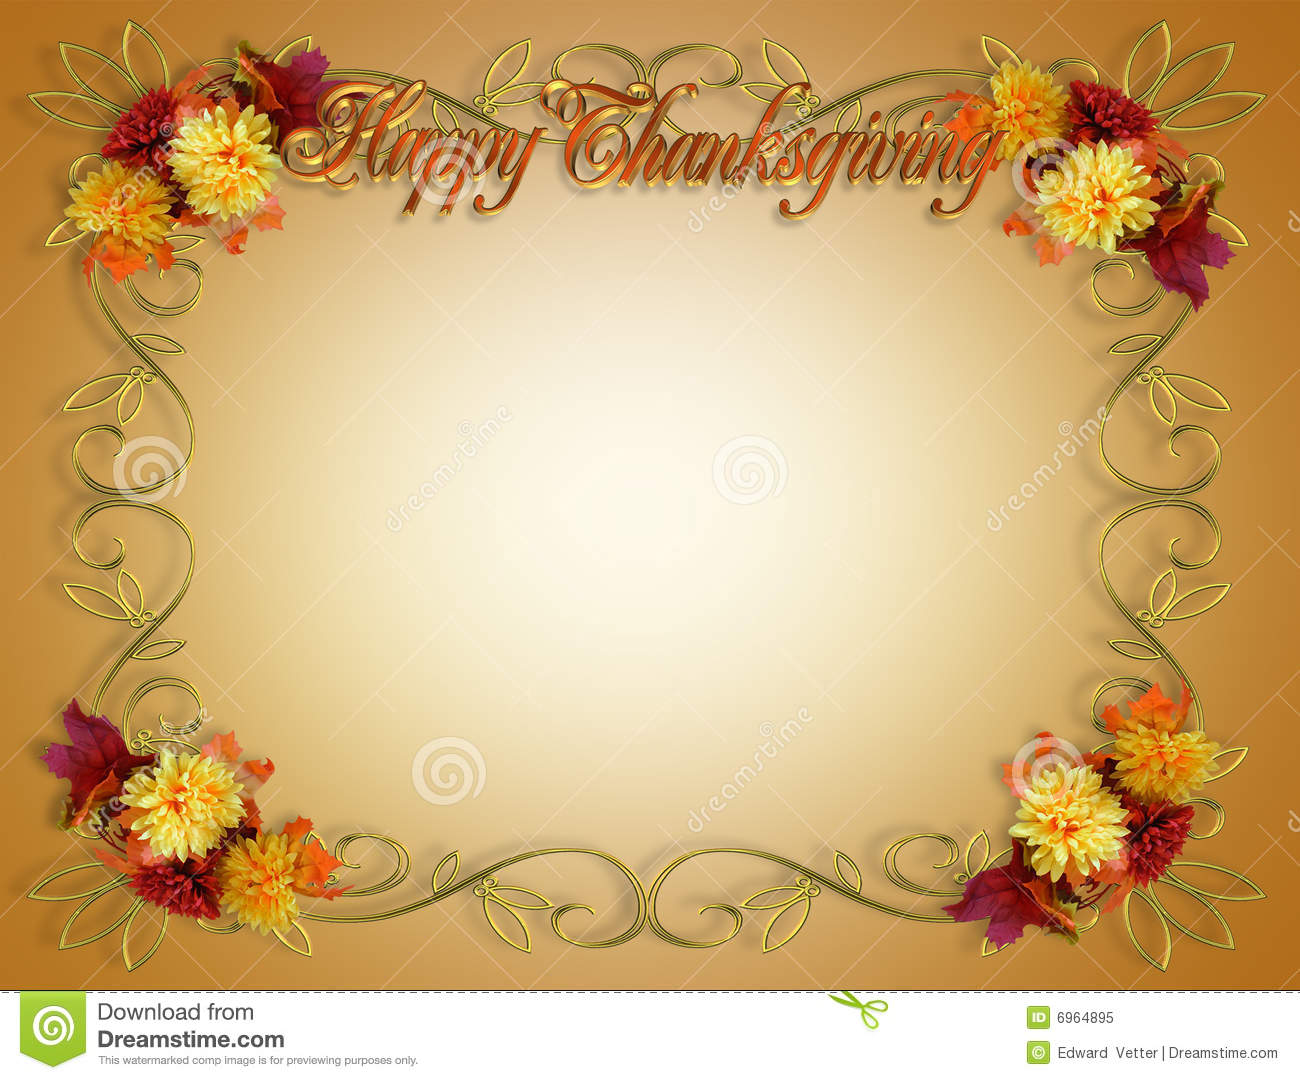 Thanksgiving Clip Art Borders - Thanksgiving Borders Clip Art Free